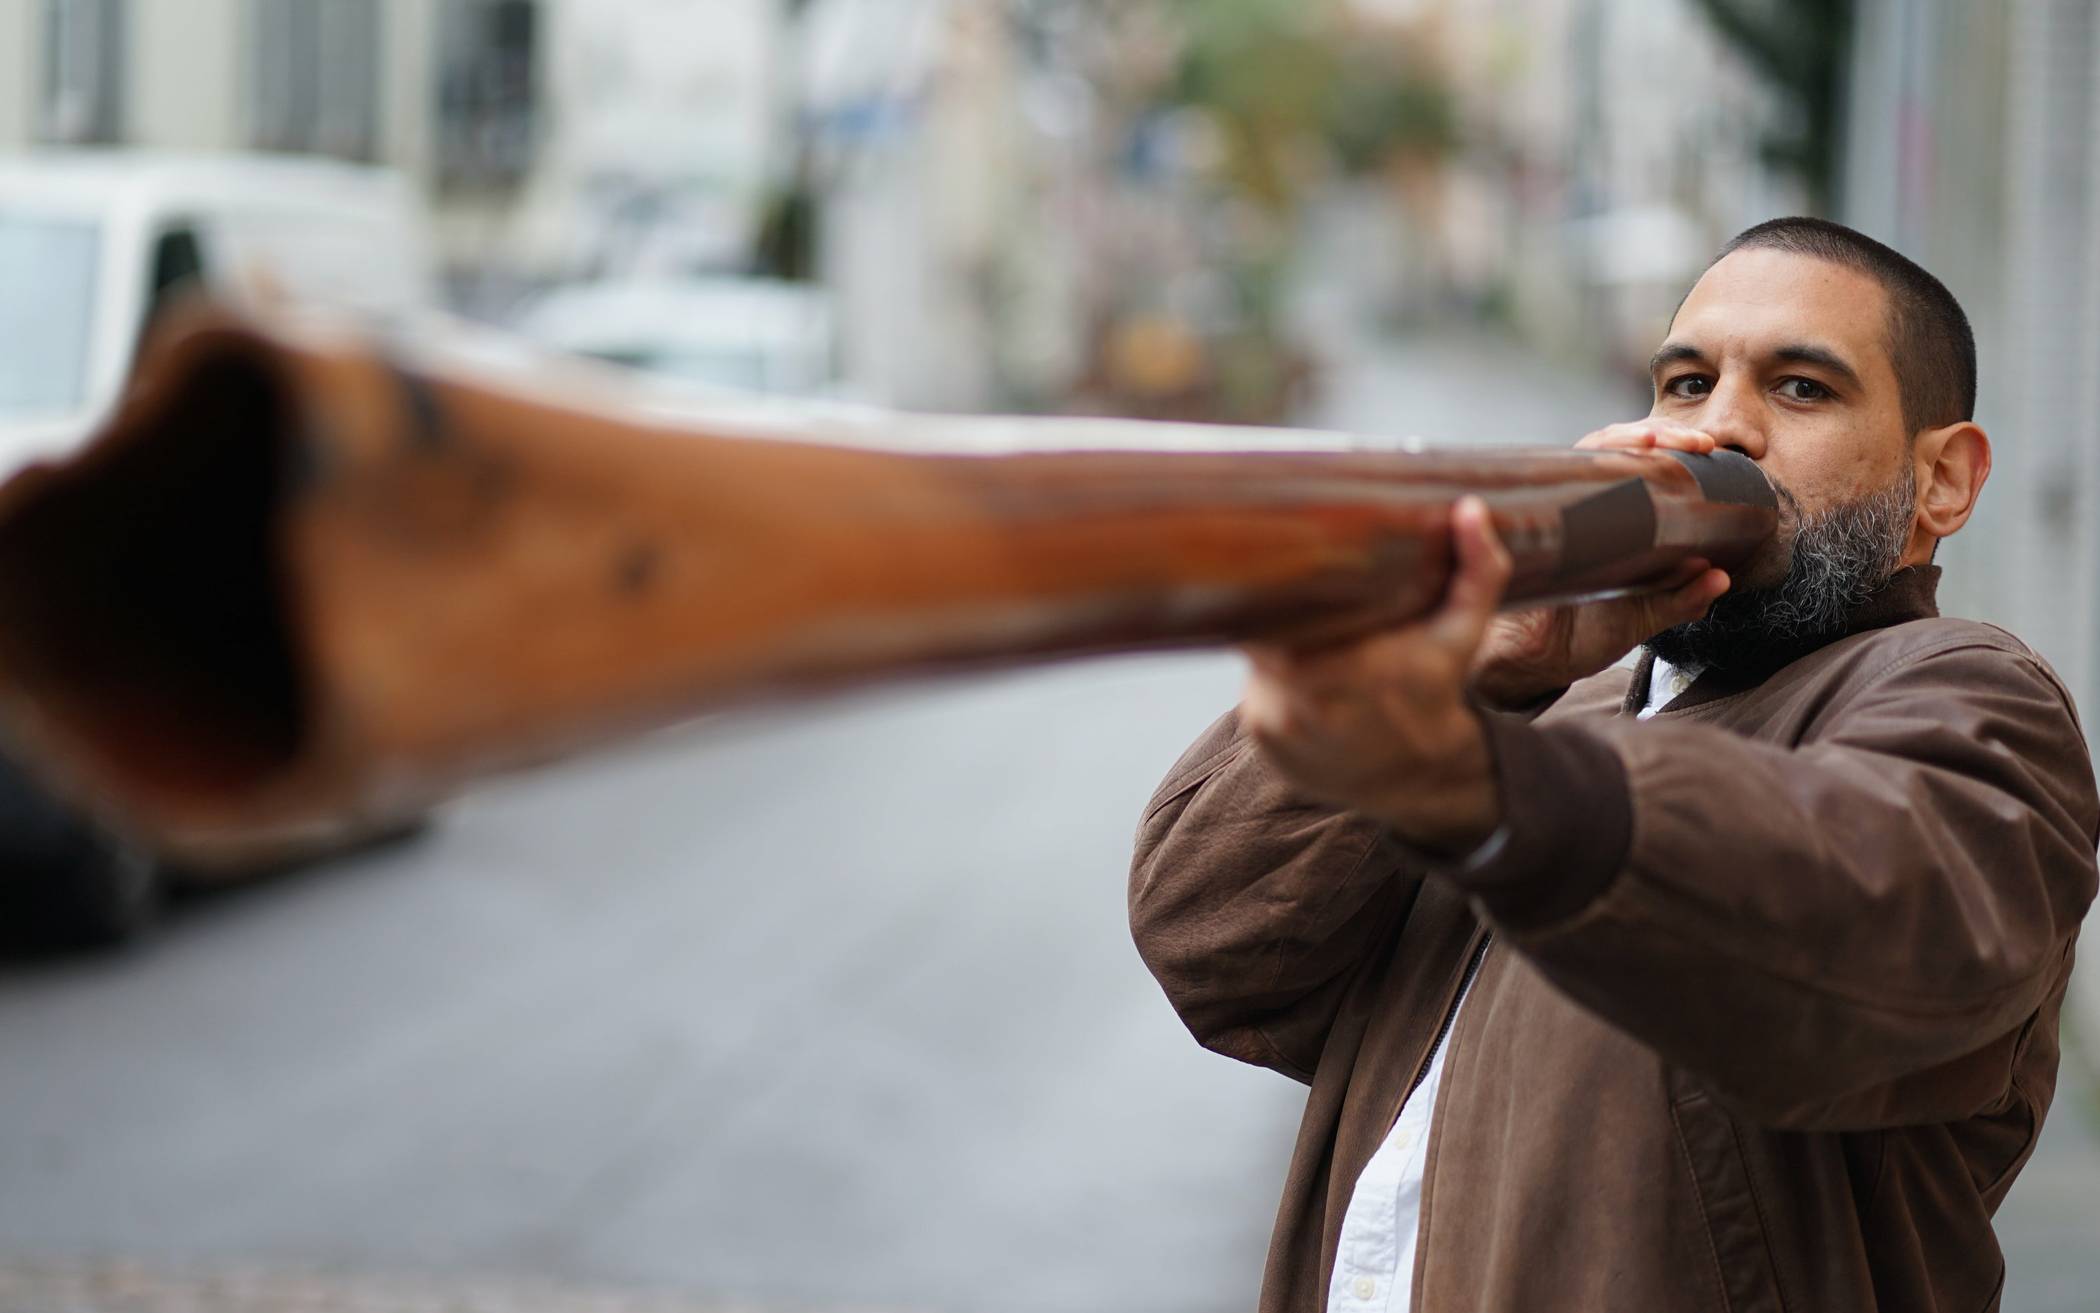 Didgeridoo-Spieler Marvin Dillmann in Aktion.&#x21e5;Foto: Veranstalter